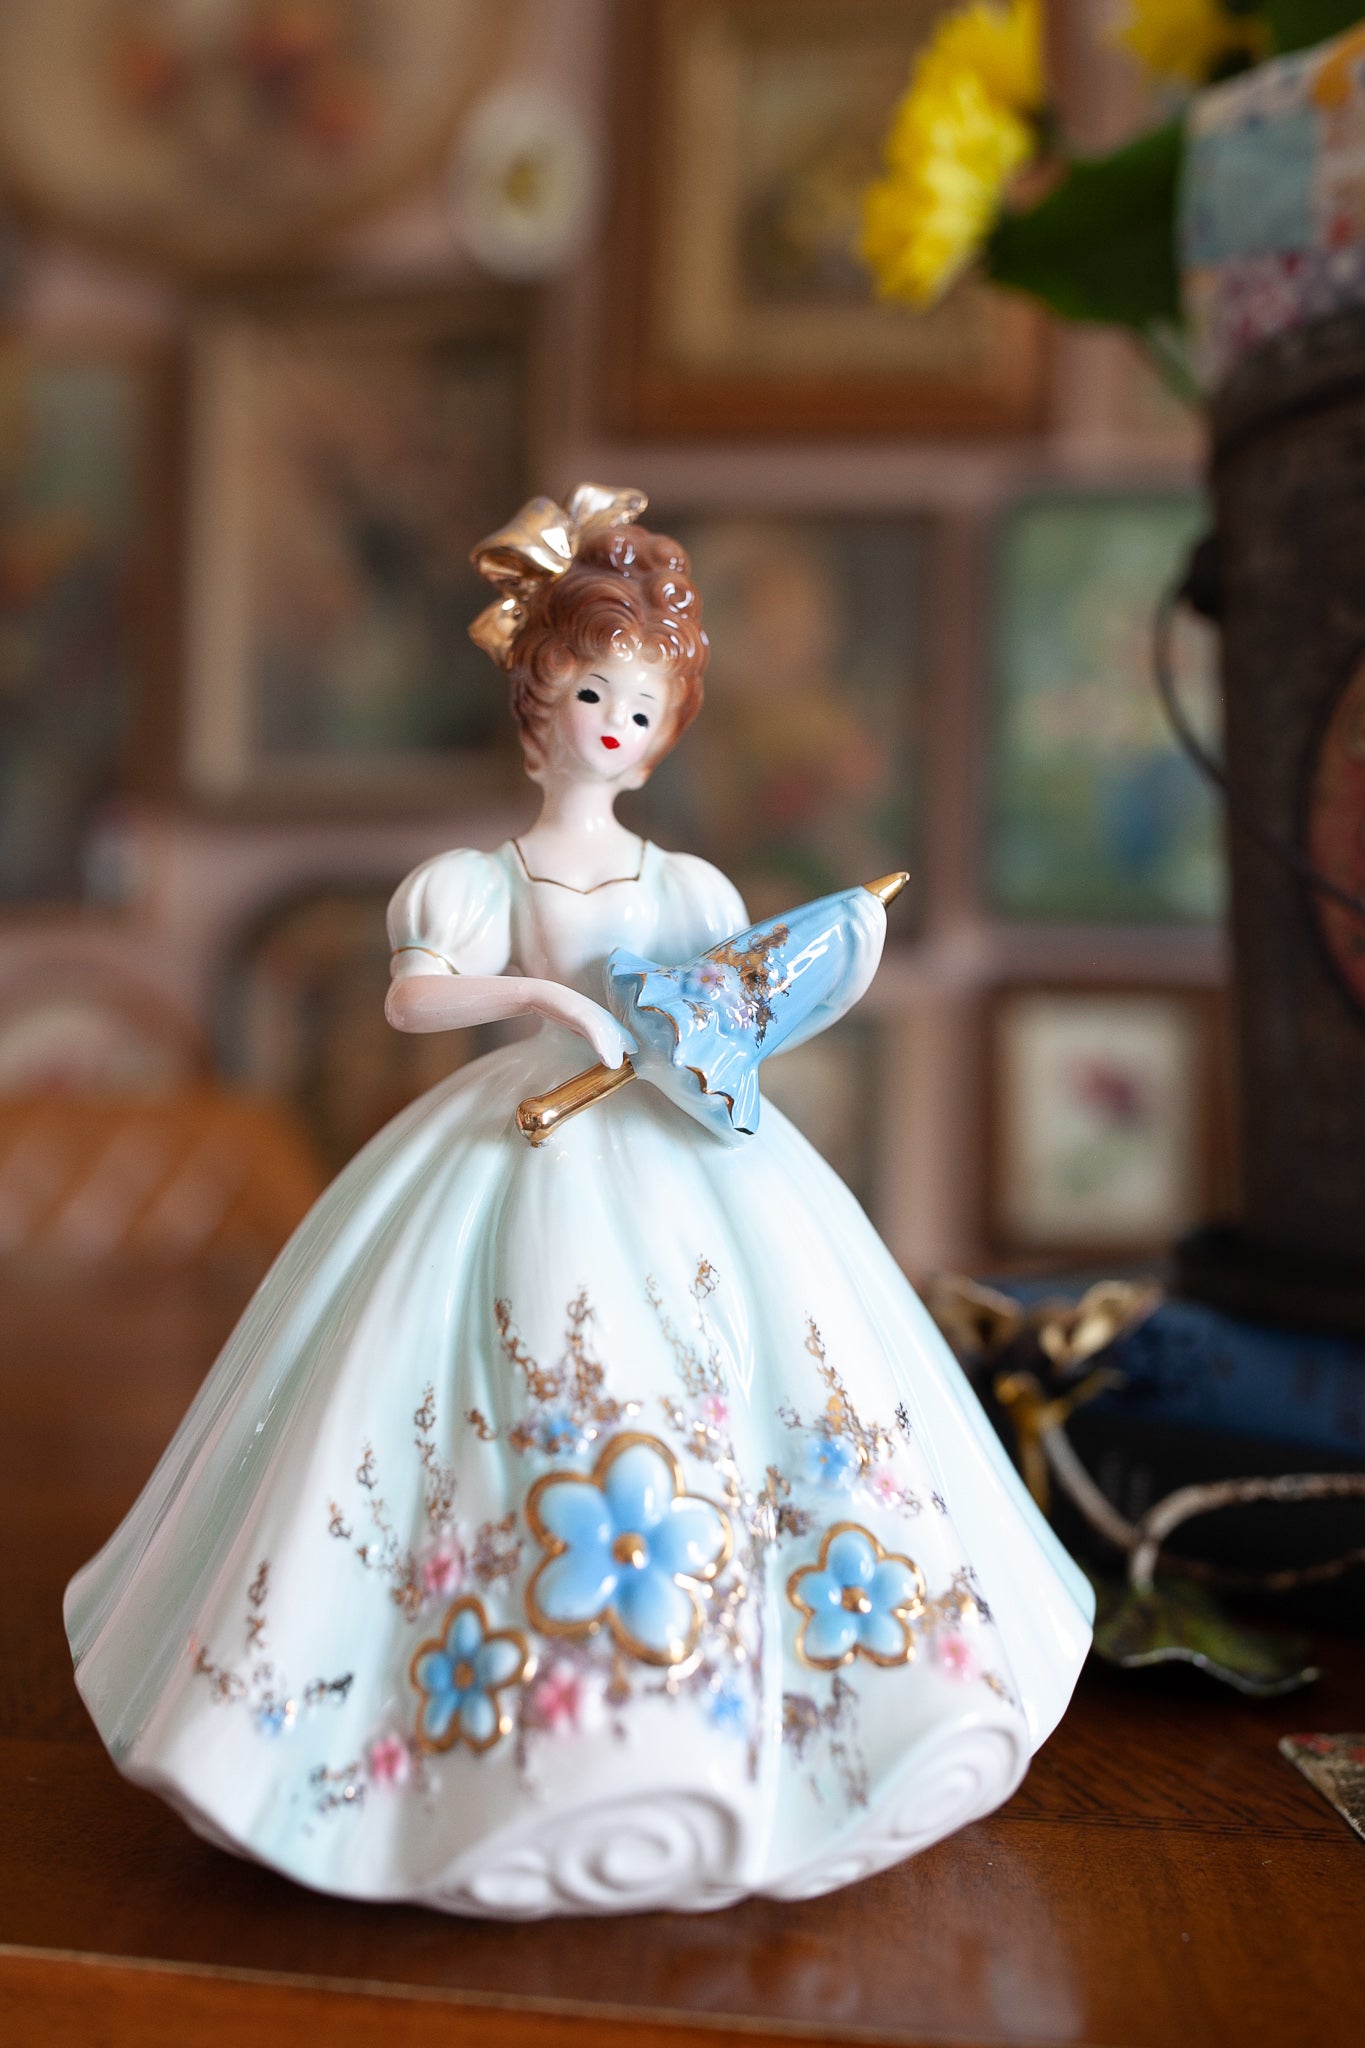 Josef Originals Figurine - White and Blue Parasol Porcelain Lady - Love Makes the World Go Round Series